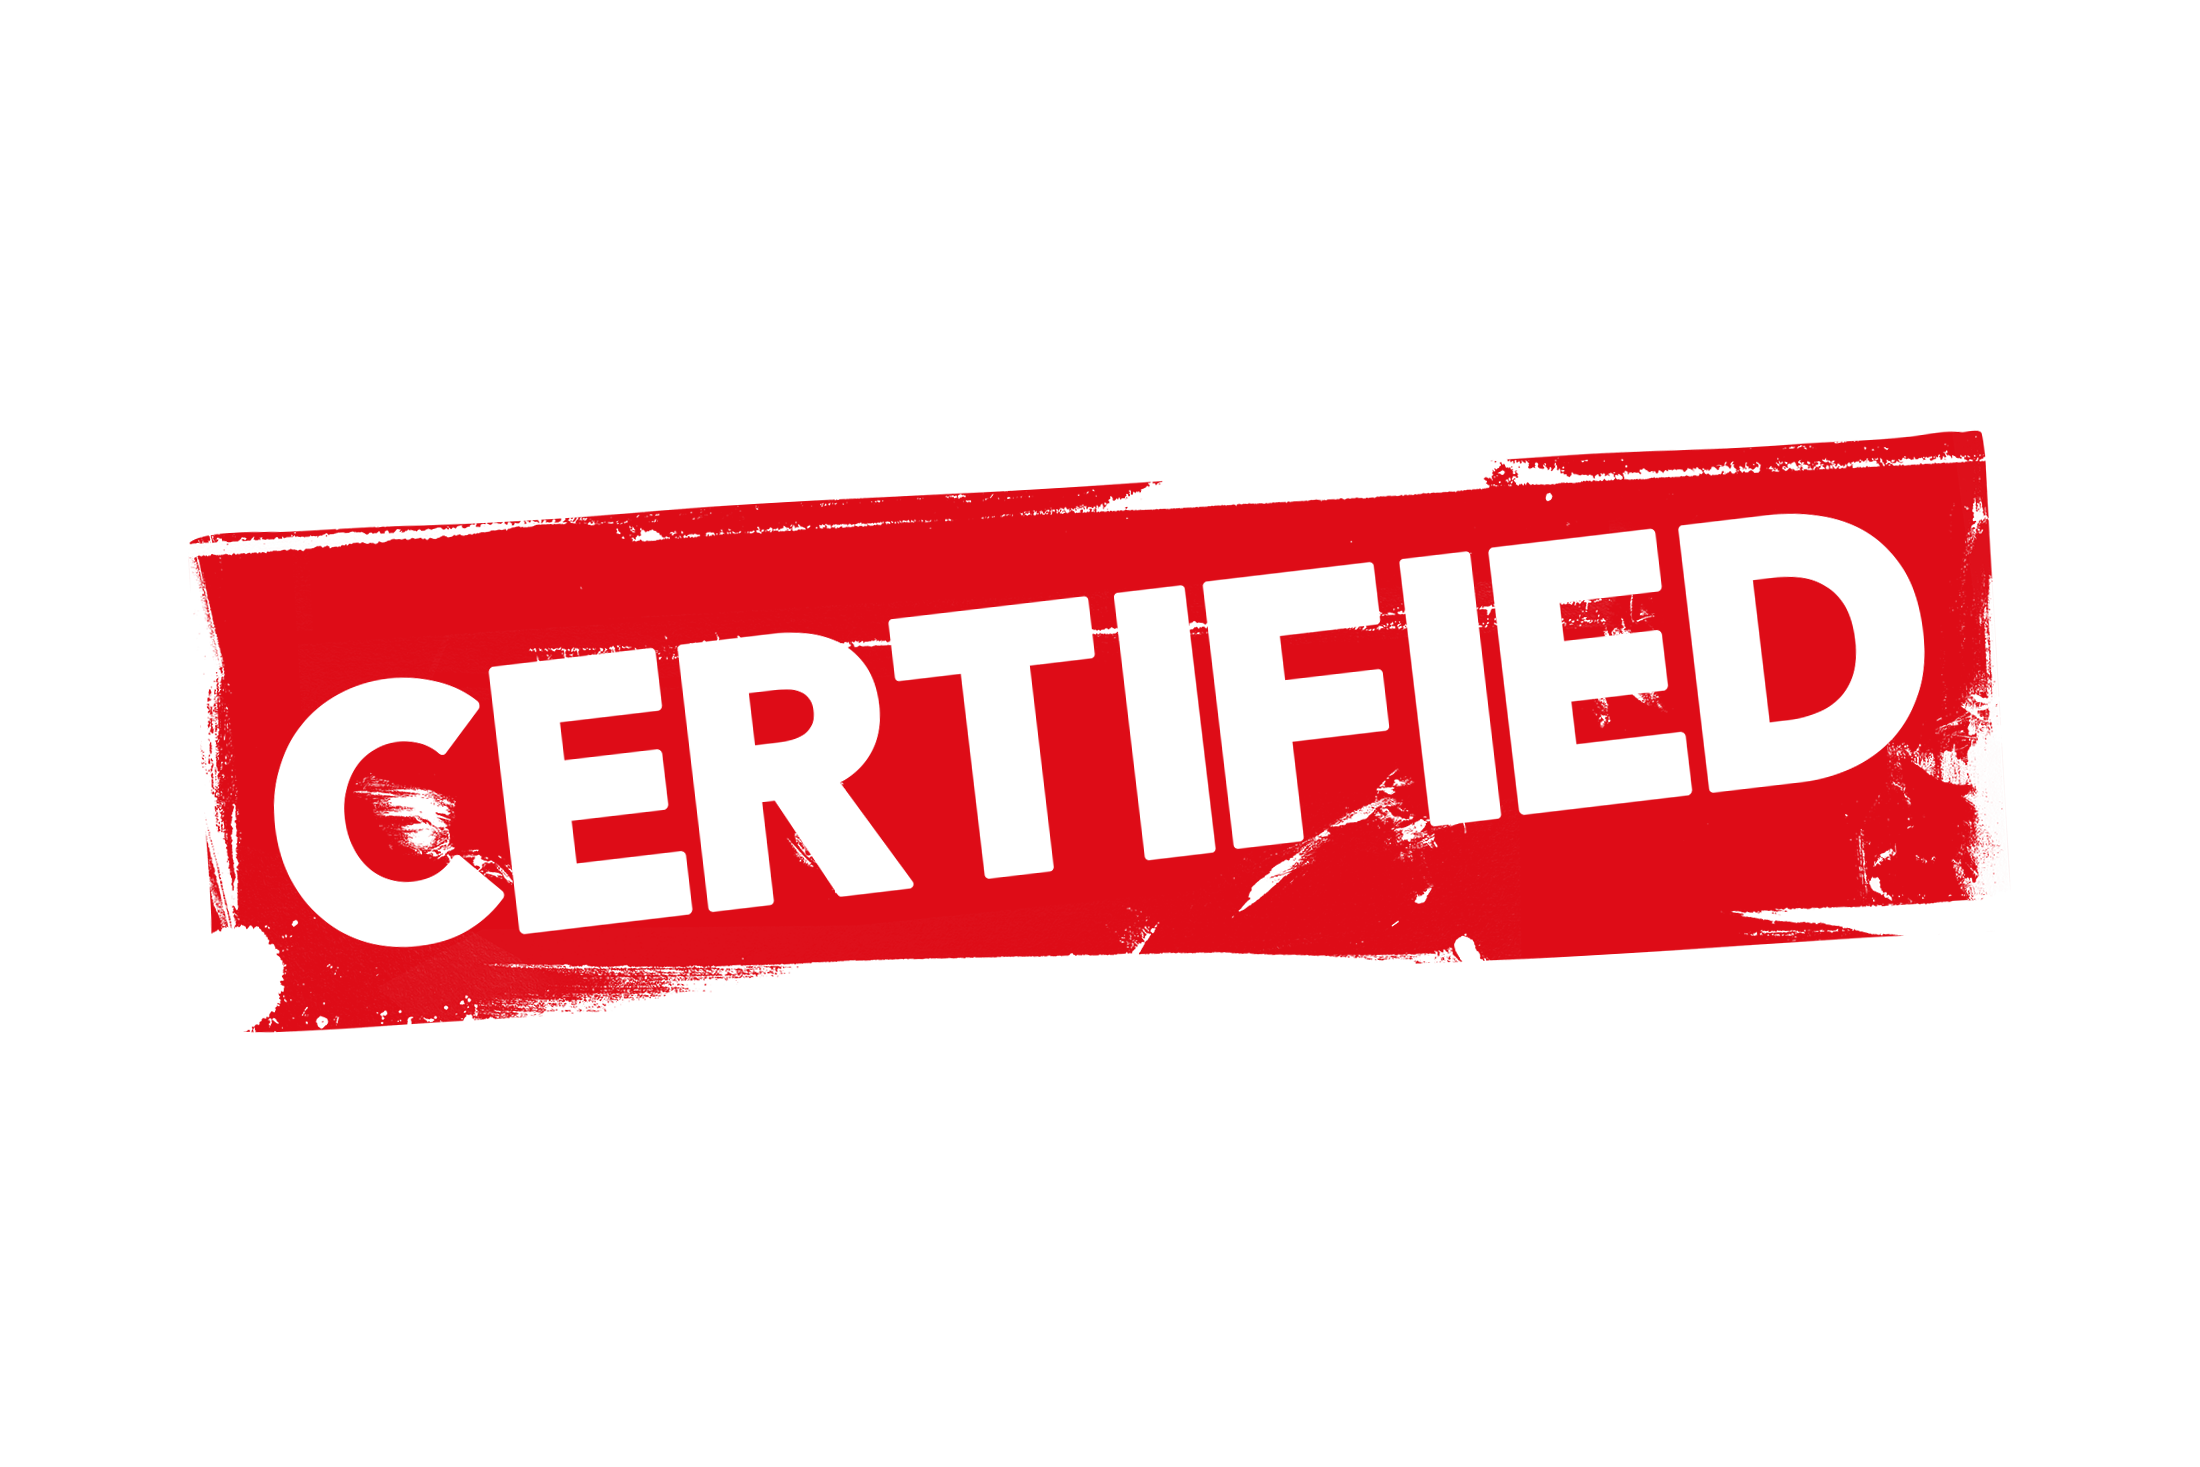 Grunge certified label PSD